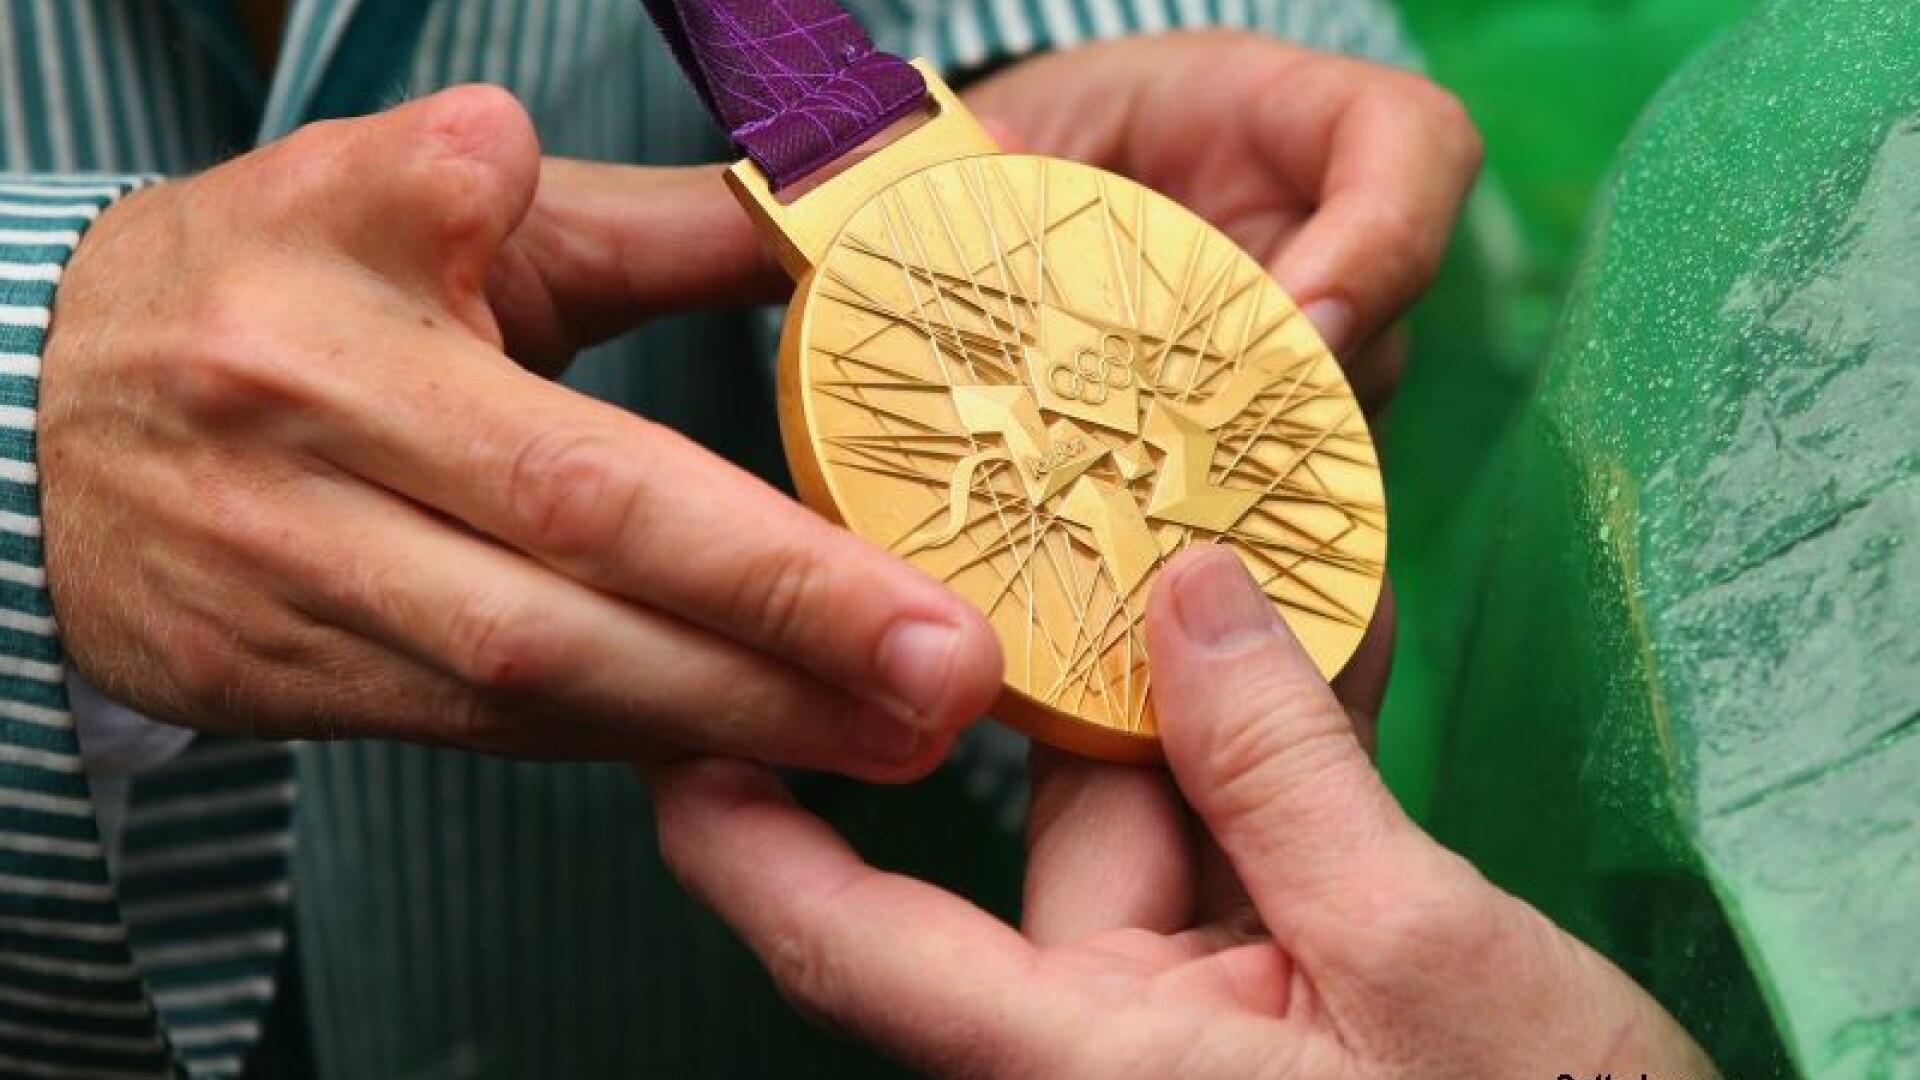 medalie de aur de la JO Londra 2012